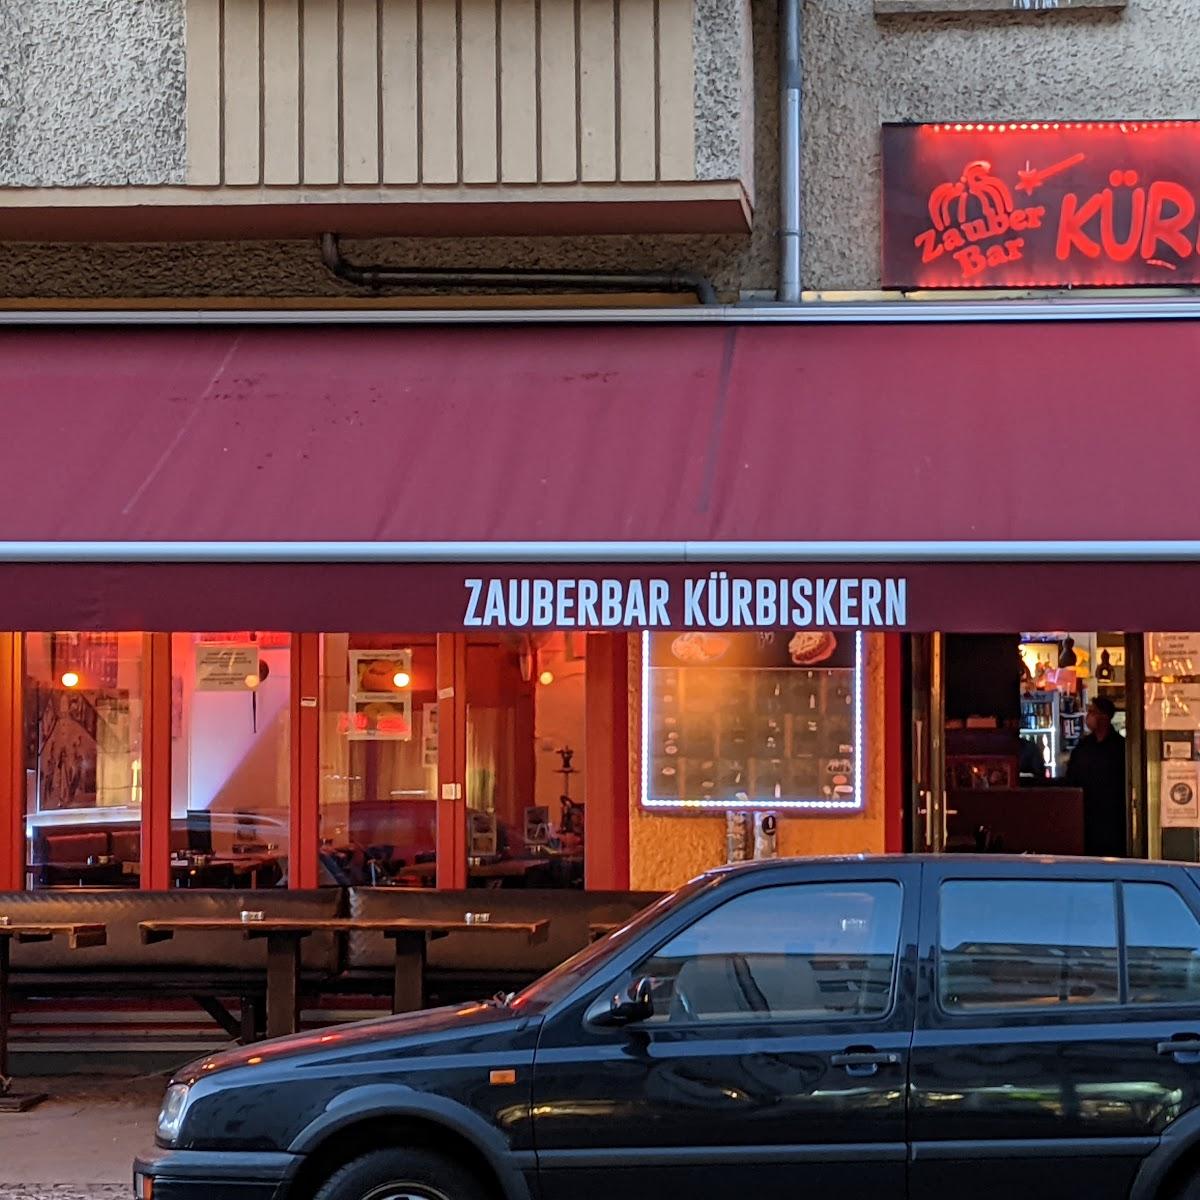 Restaurant "Kürbiskern" in Berlin